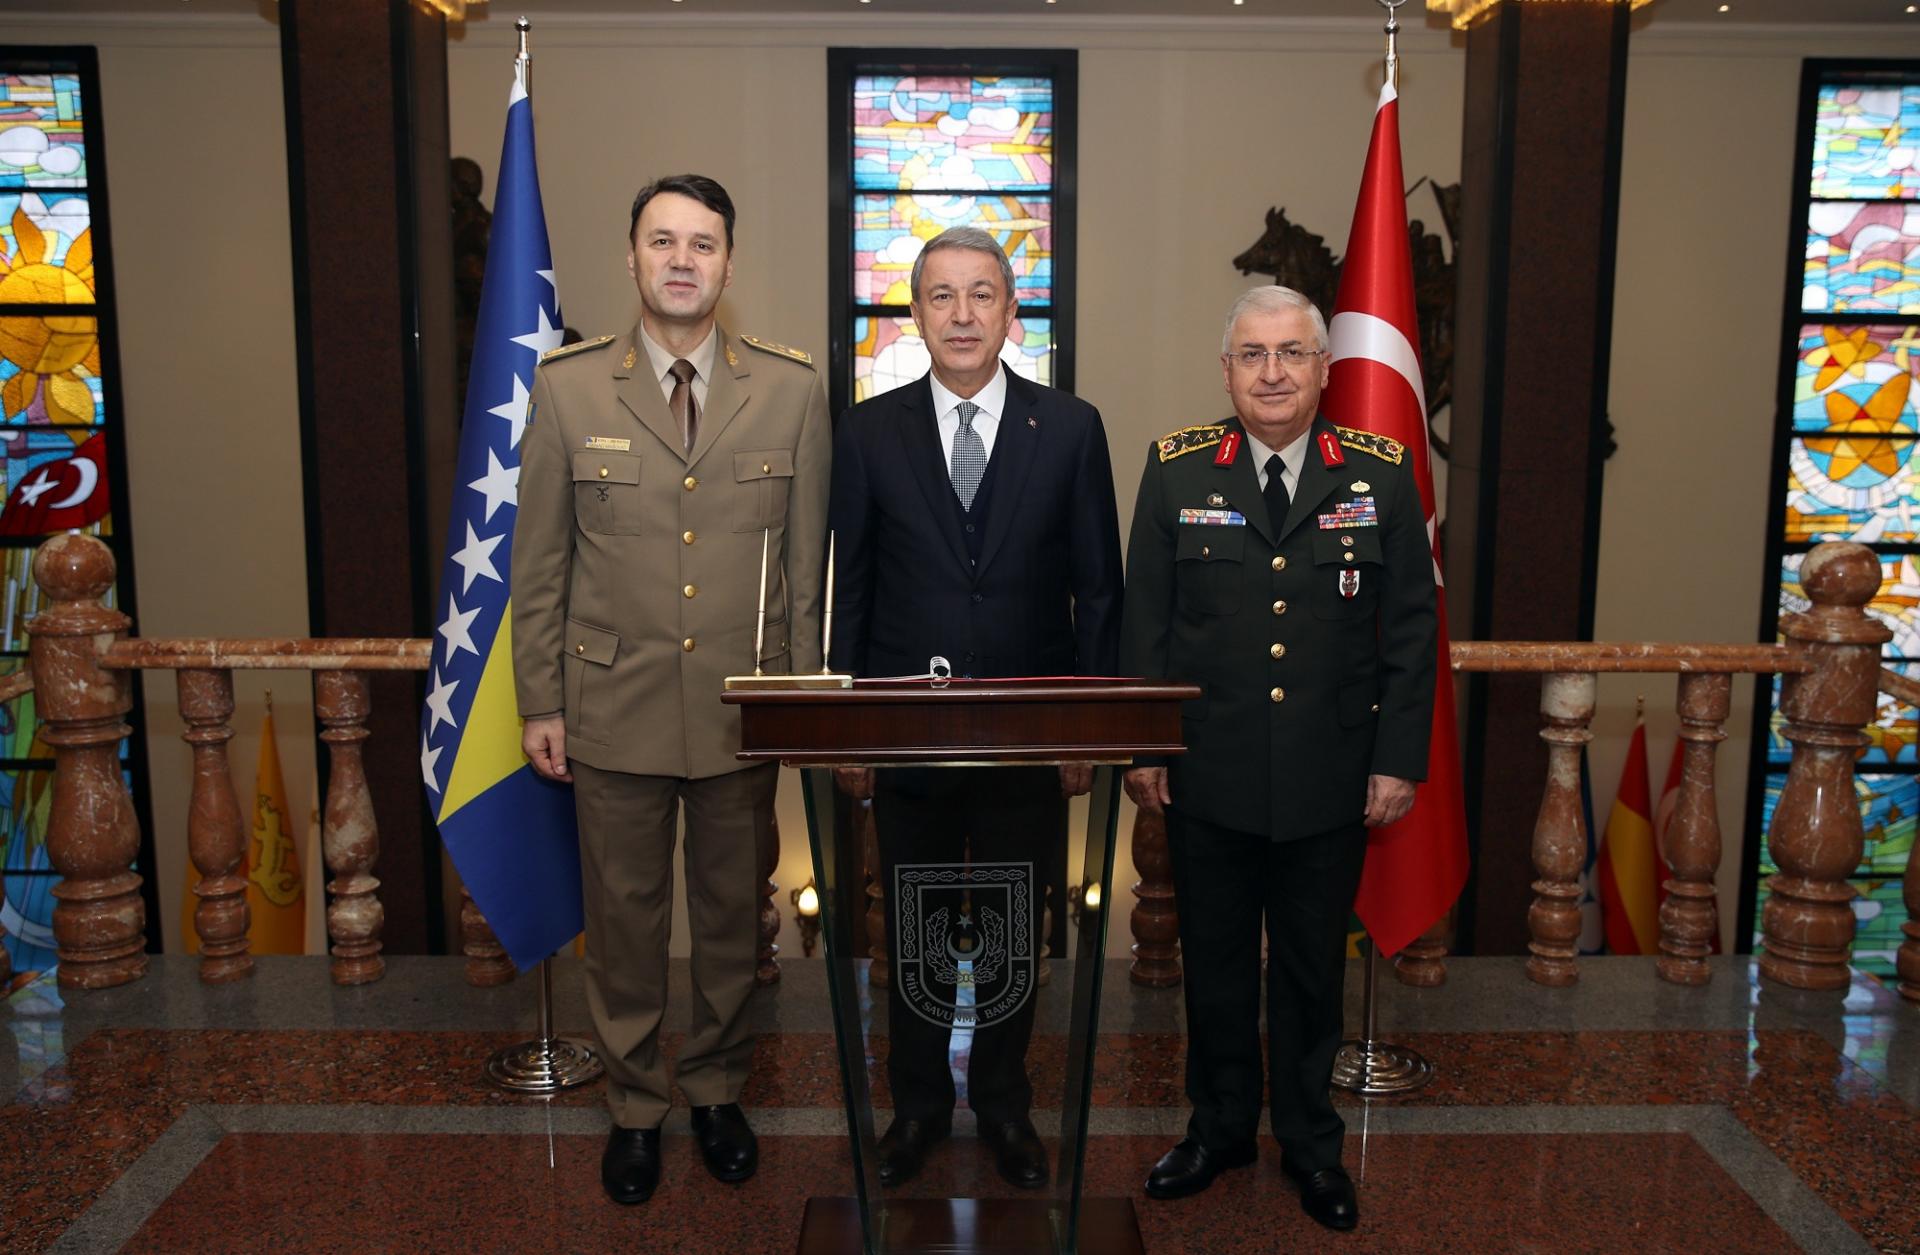 Turski ministar odbrane Akar primio načelnika Zajedničkog štaba OSBiH Mašovića